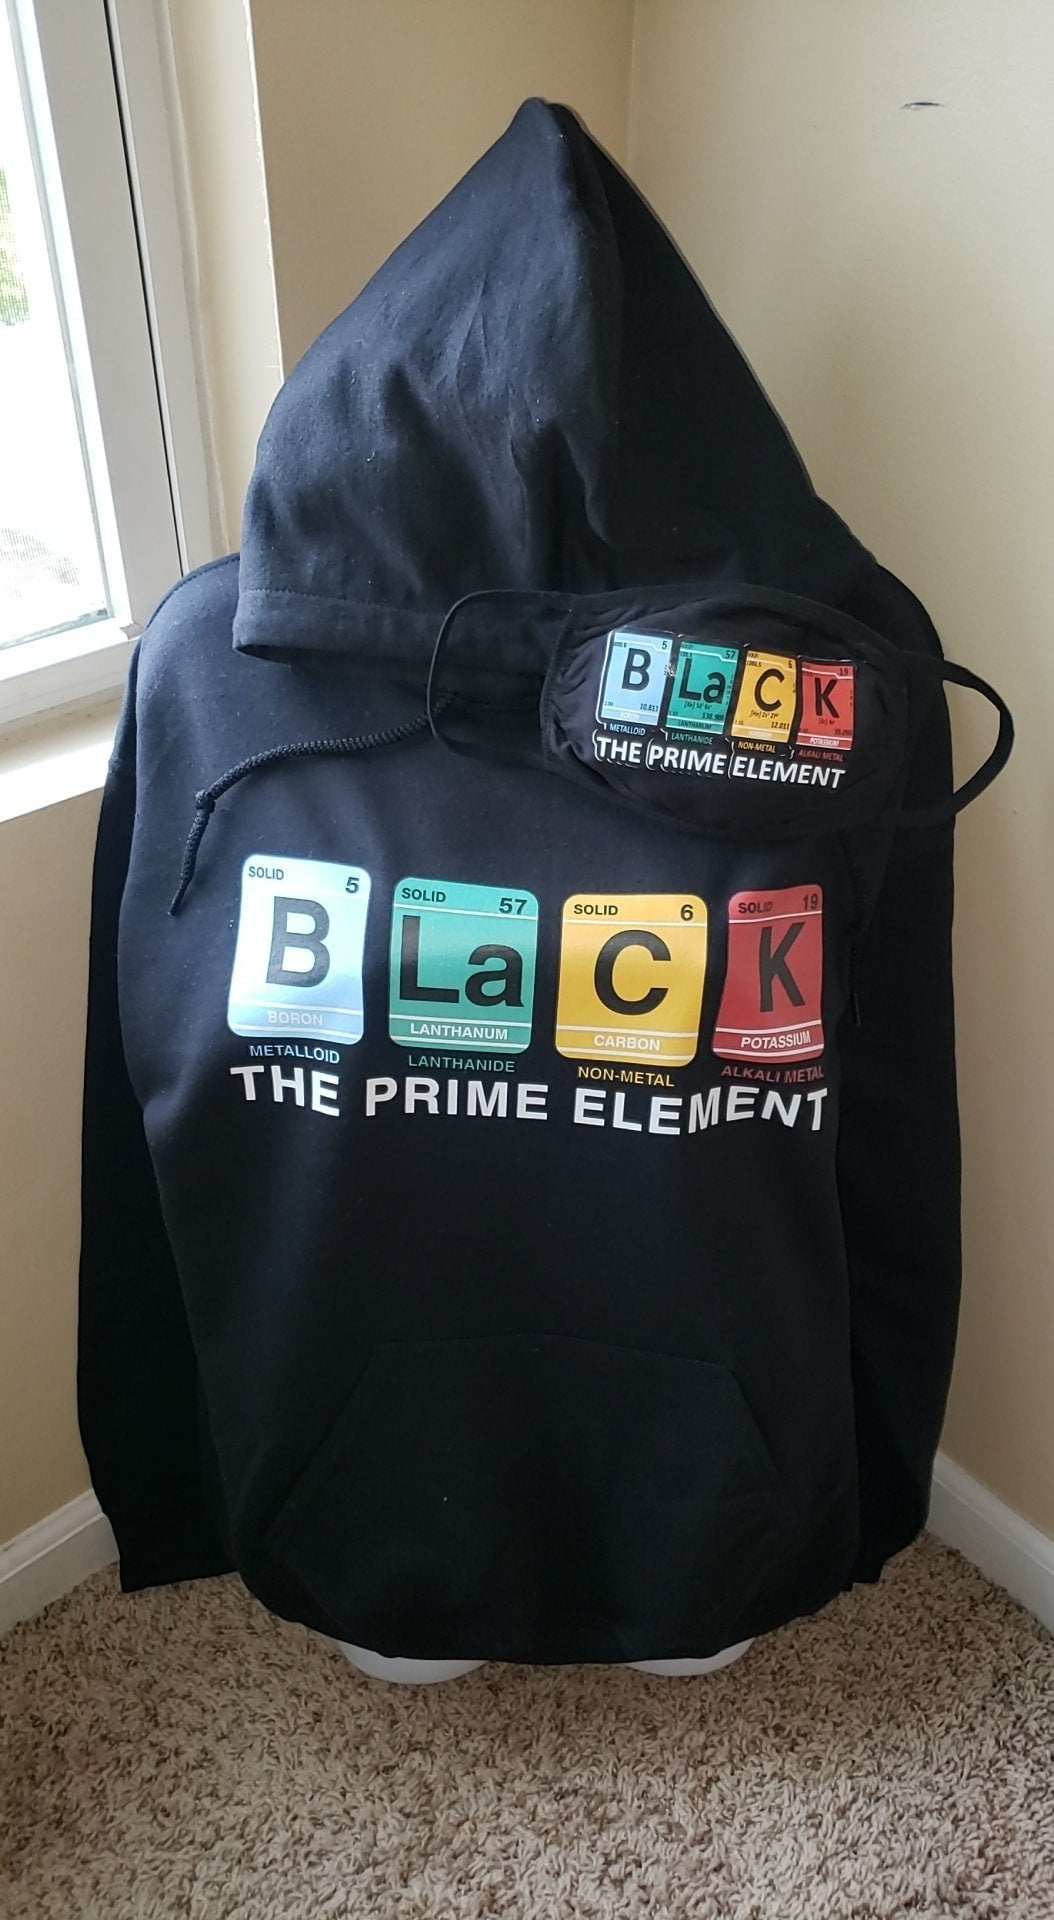 Black Element